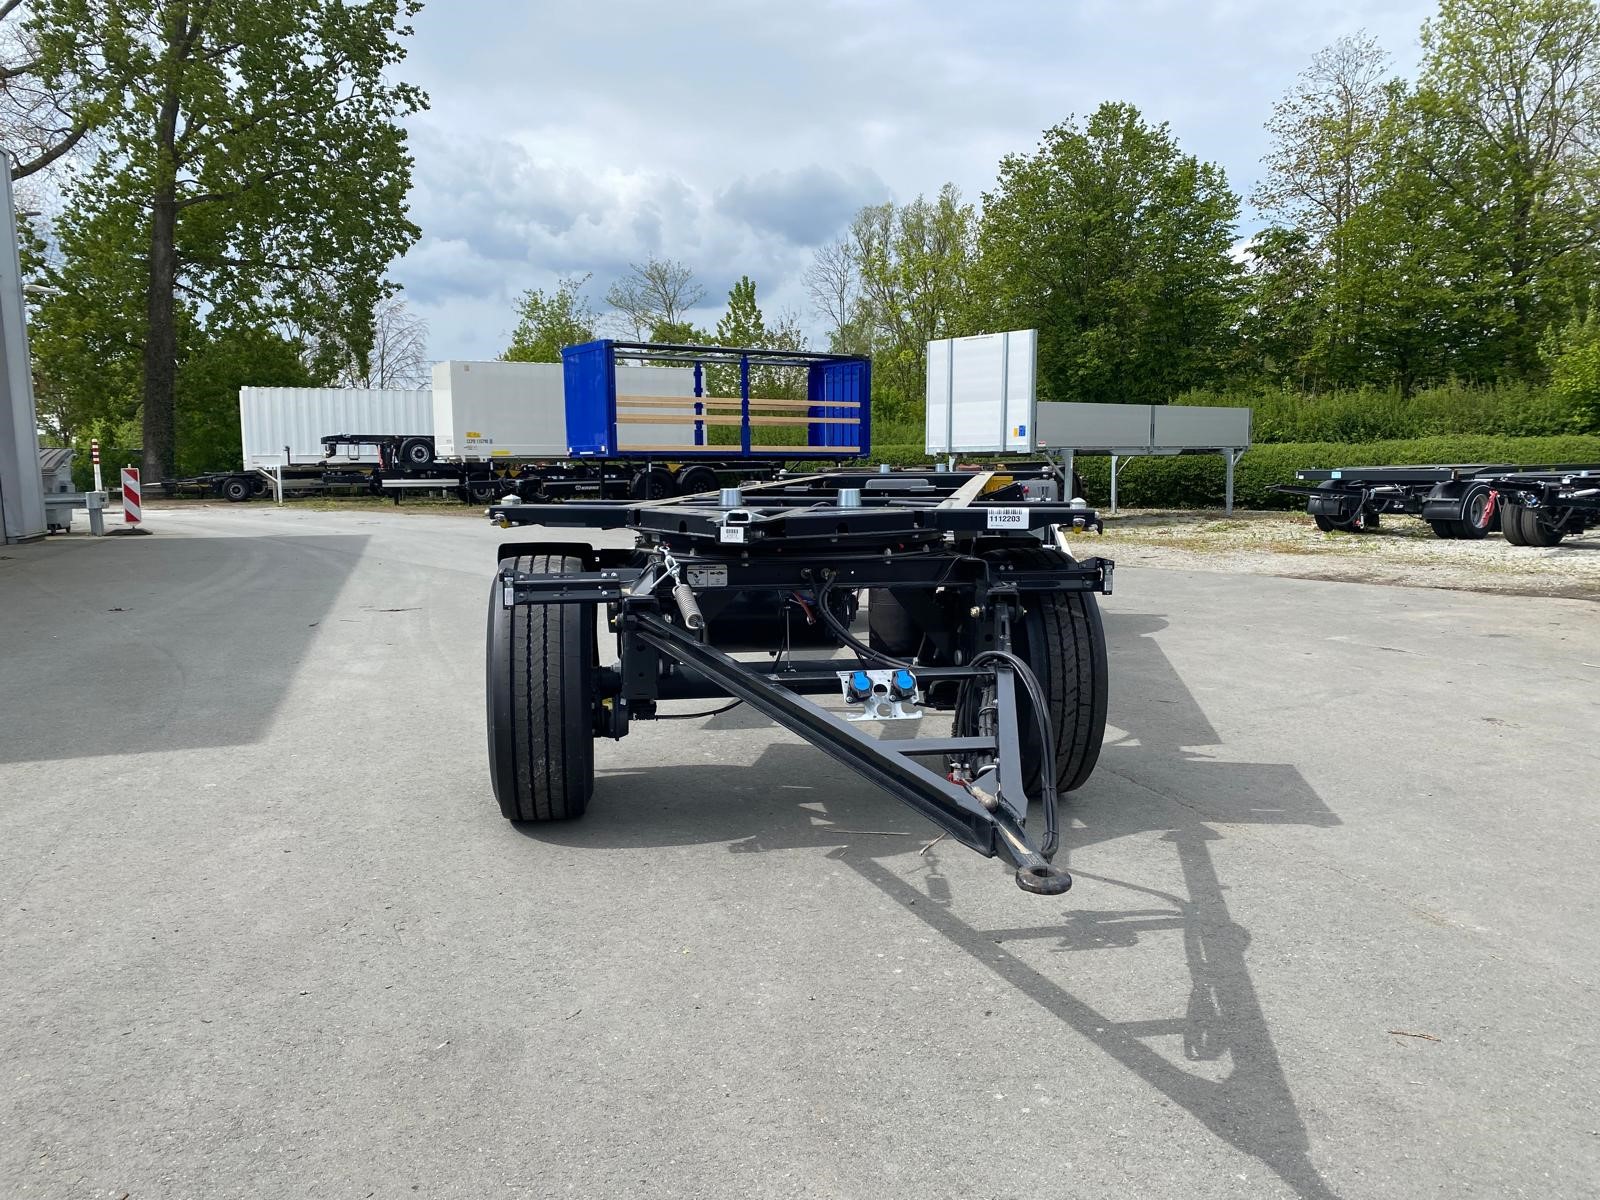 #LA005 - Bild: 1 | 2 – axle trailer for swap bodies | BDF-System, Standard Ausführung, NEUFAHRZEUG!